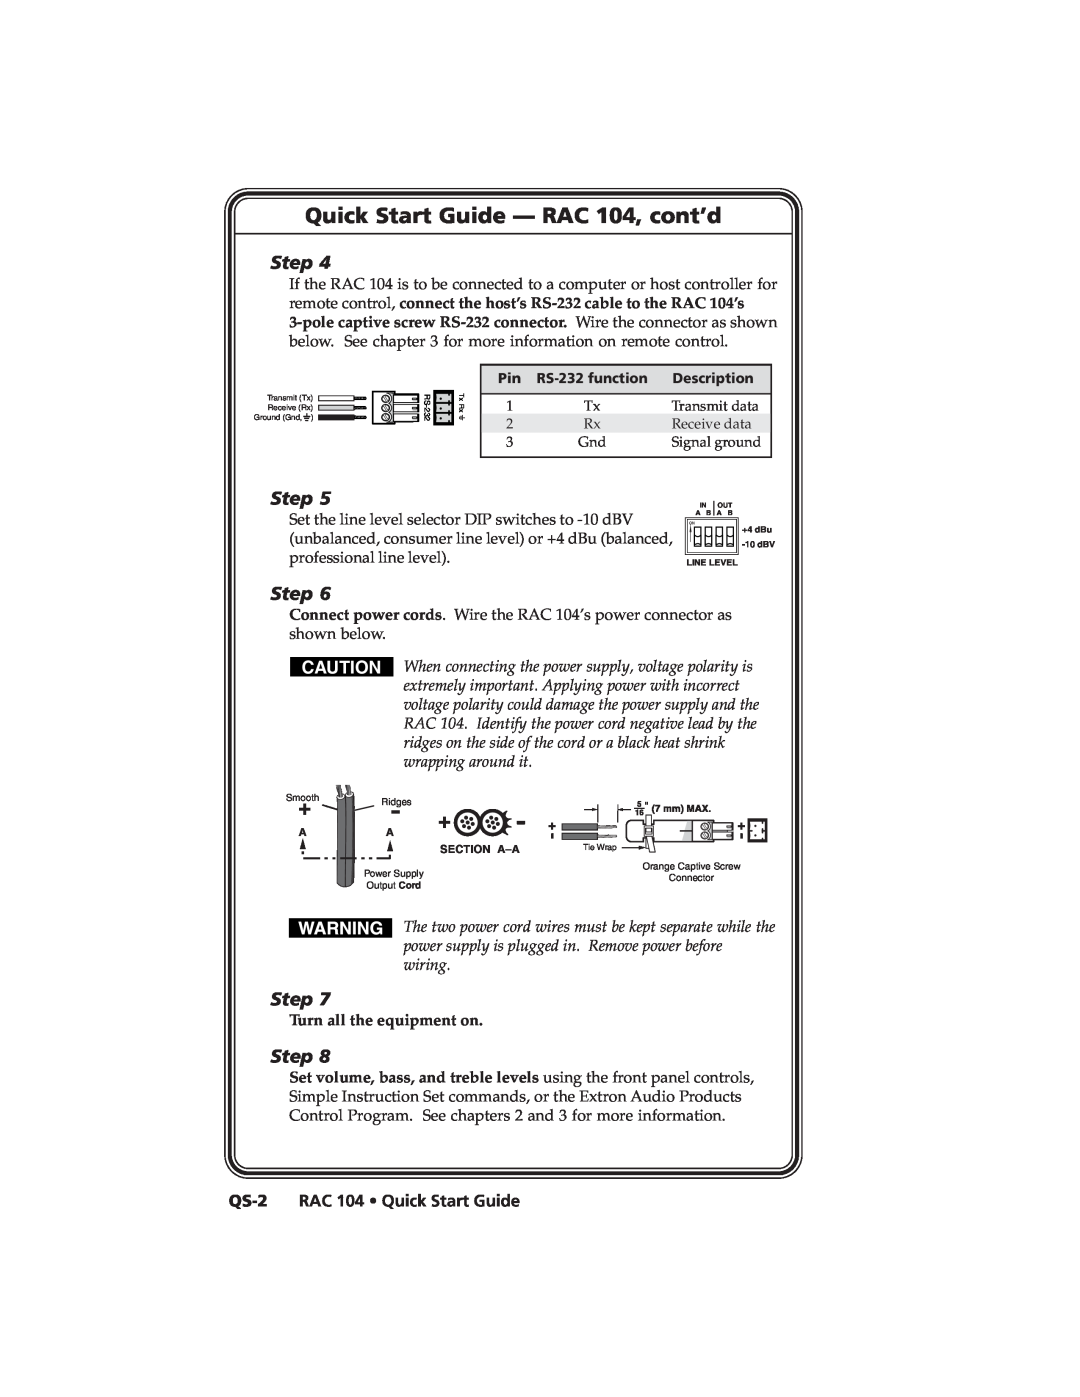 Extron electronic user manual Quick Start Guide - RAC 104, cont’d, QS-2RAC 104 Quick Start Guide, Step 